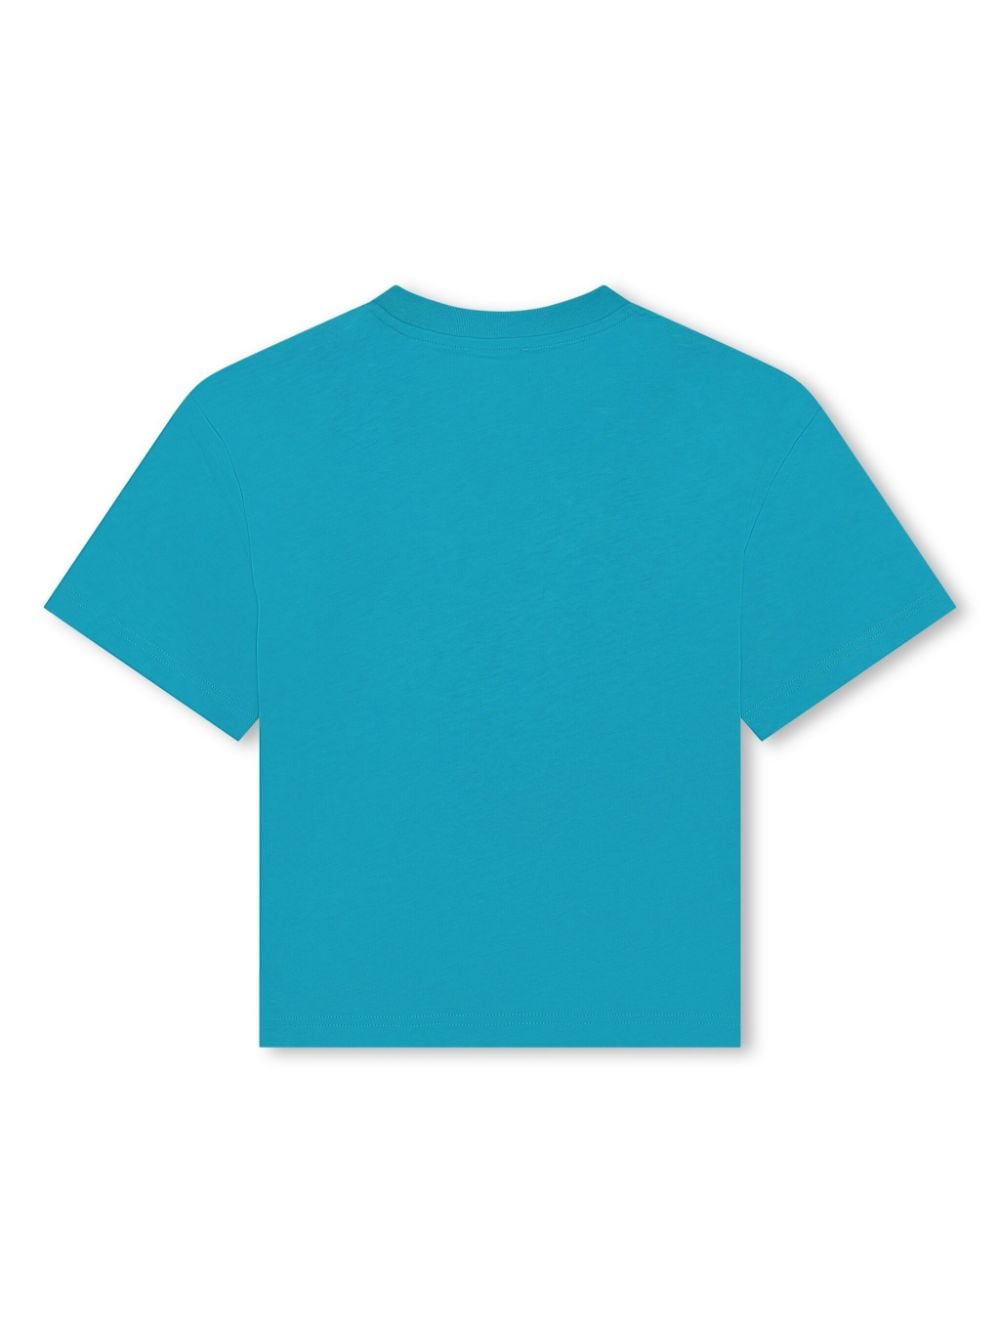 T-shirt turchese per bambino con logo